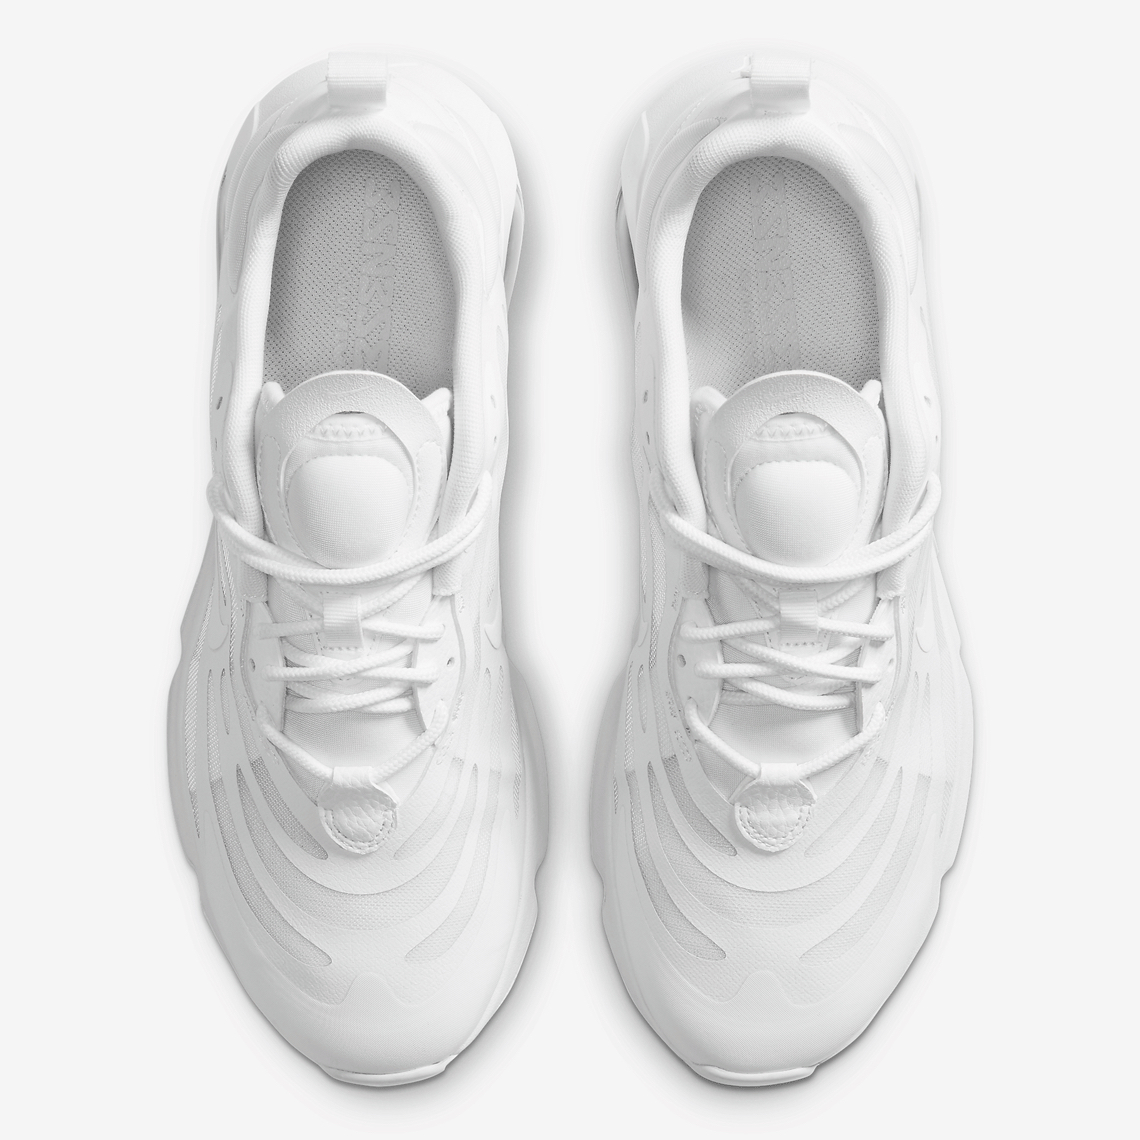 Nike Air Max 200 Triple White CK6811-101 | SneakerNews.com